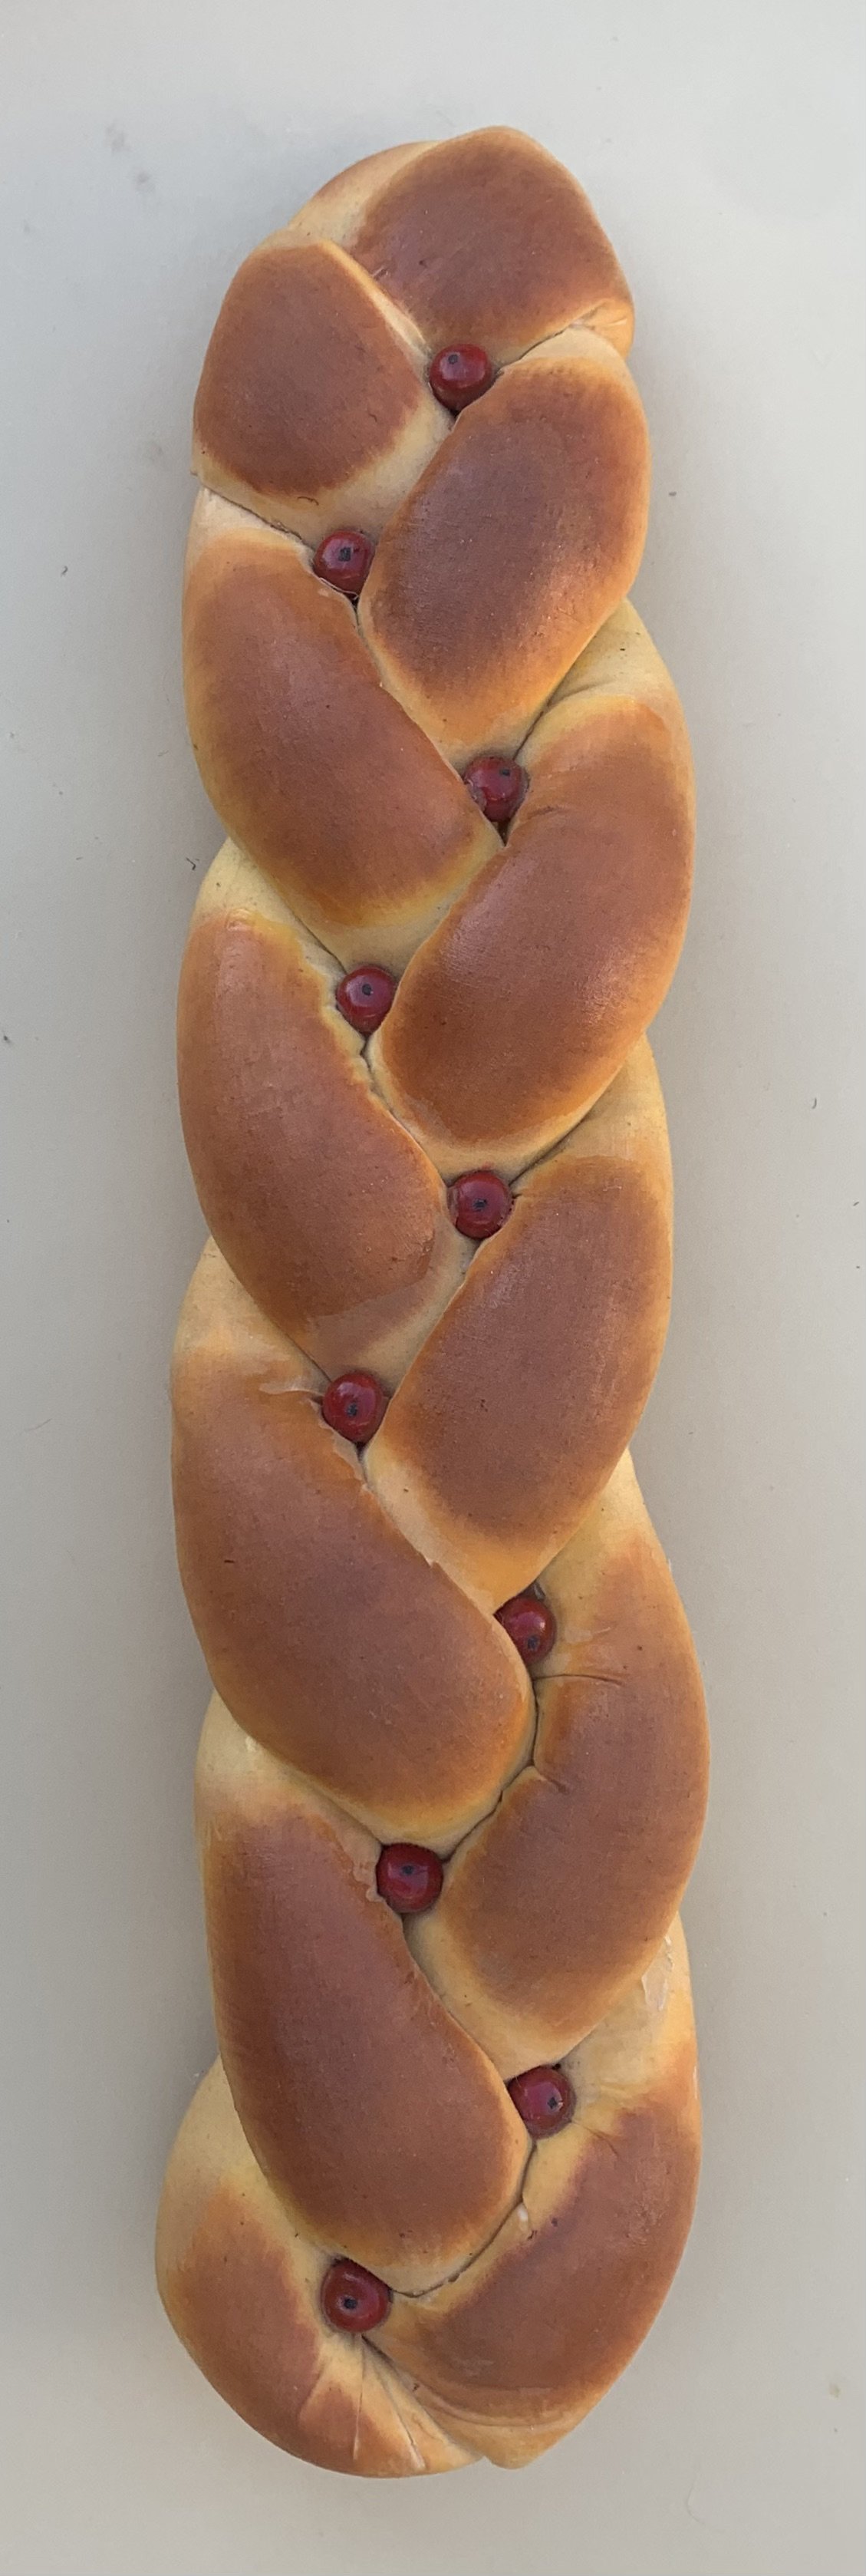 Braided Bread by Nancy Overton